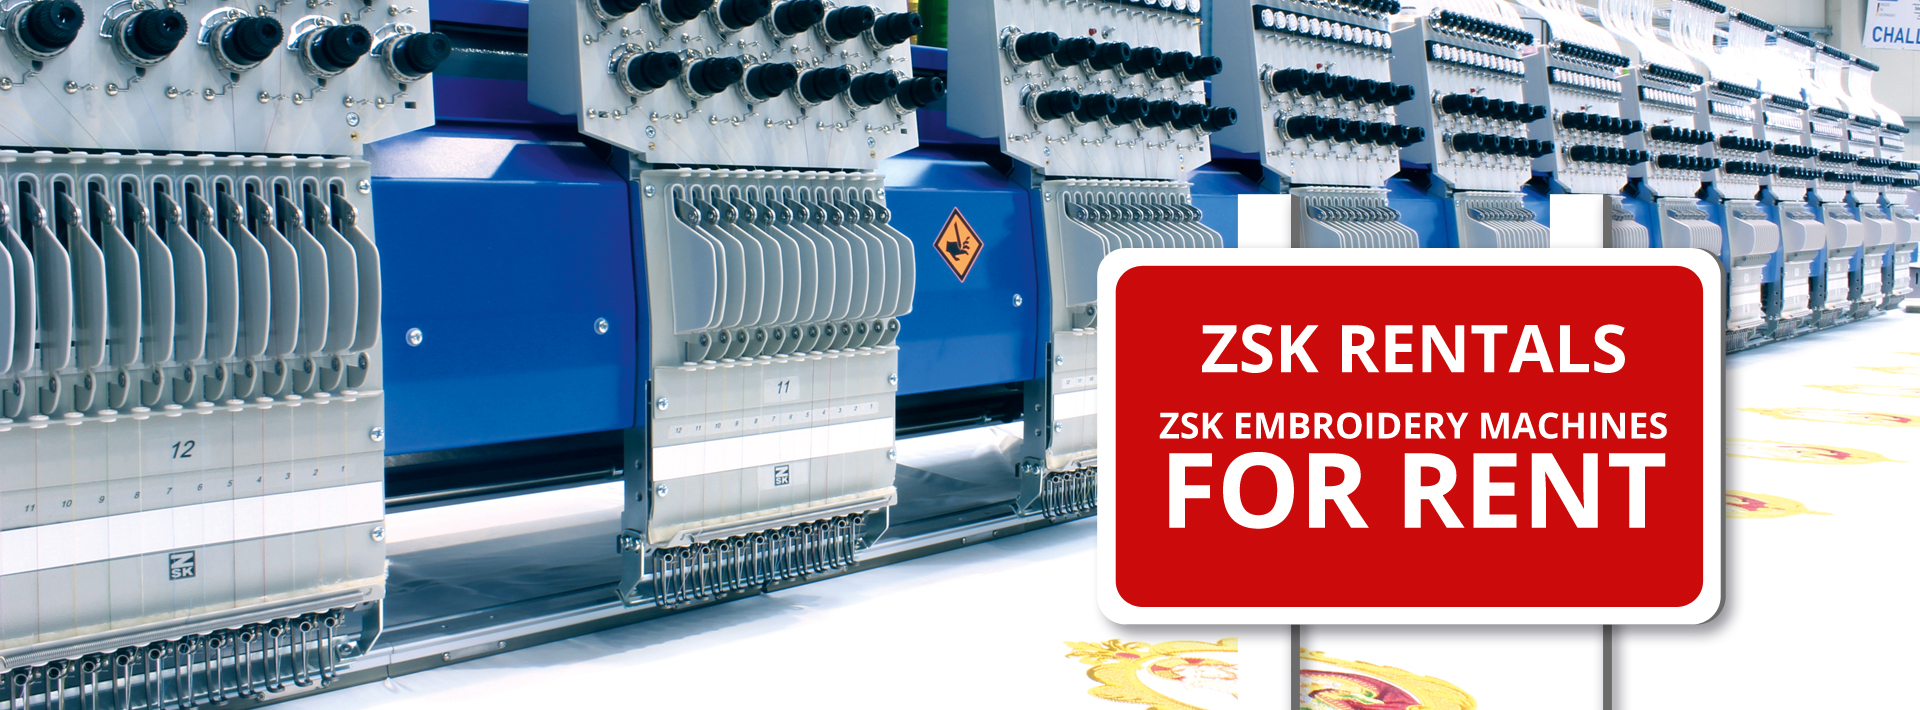 ZSK RENTALS - Rent a ZSK Embroidery Machine